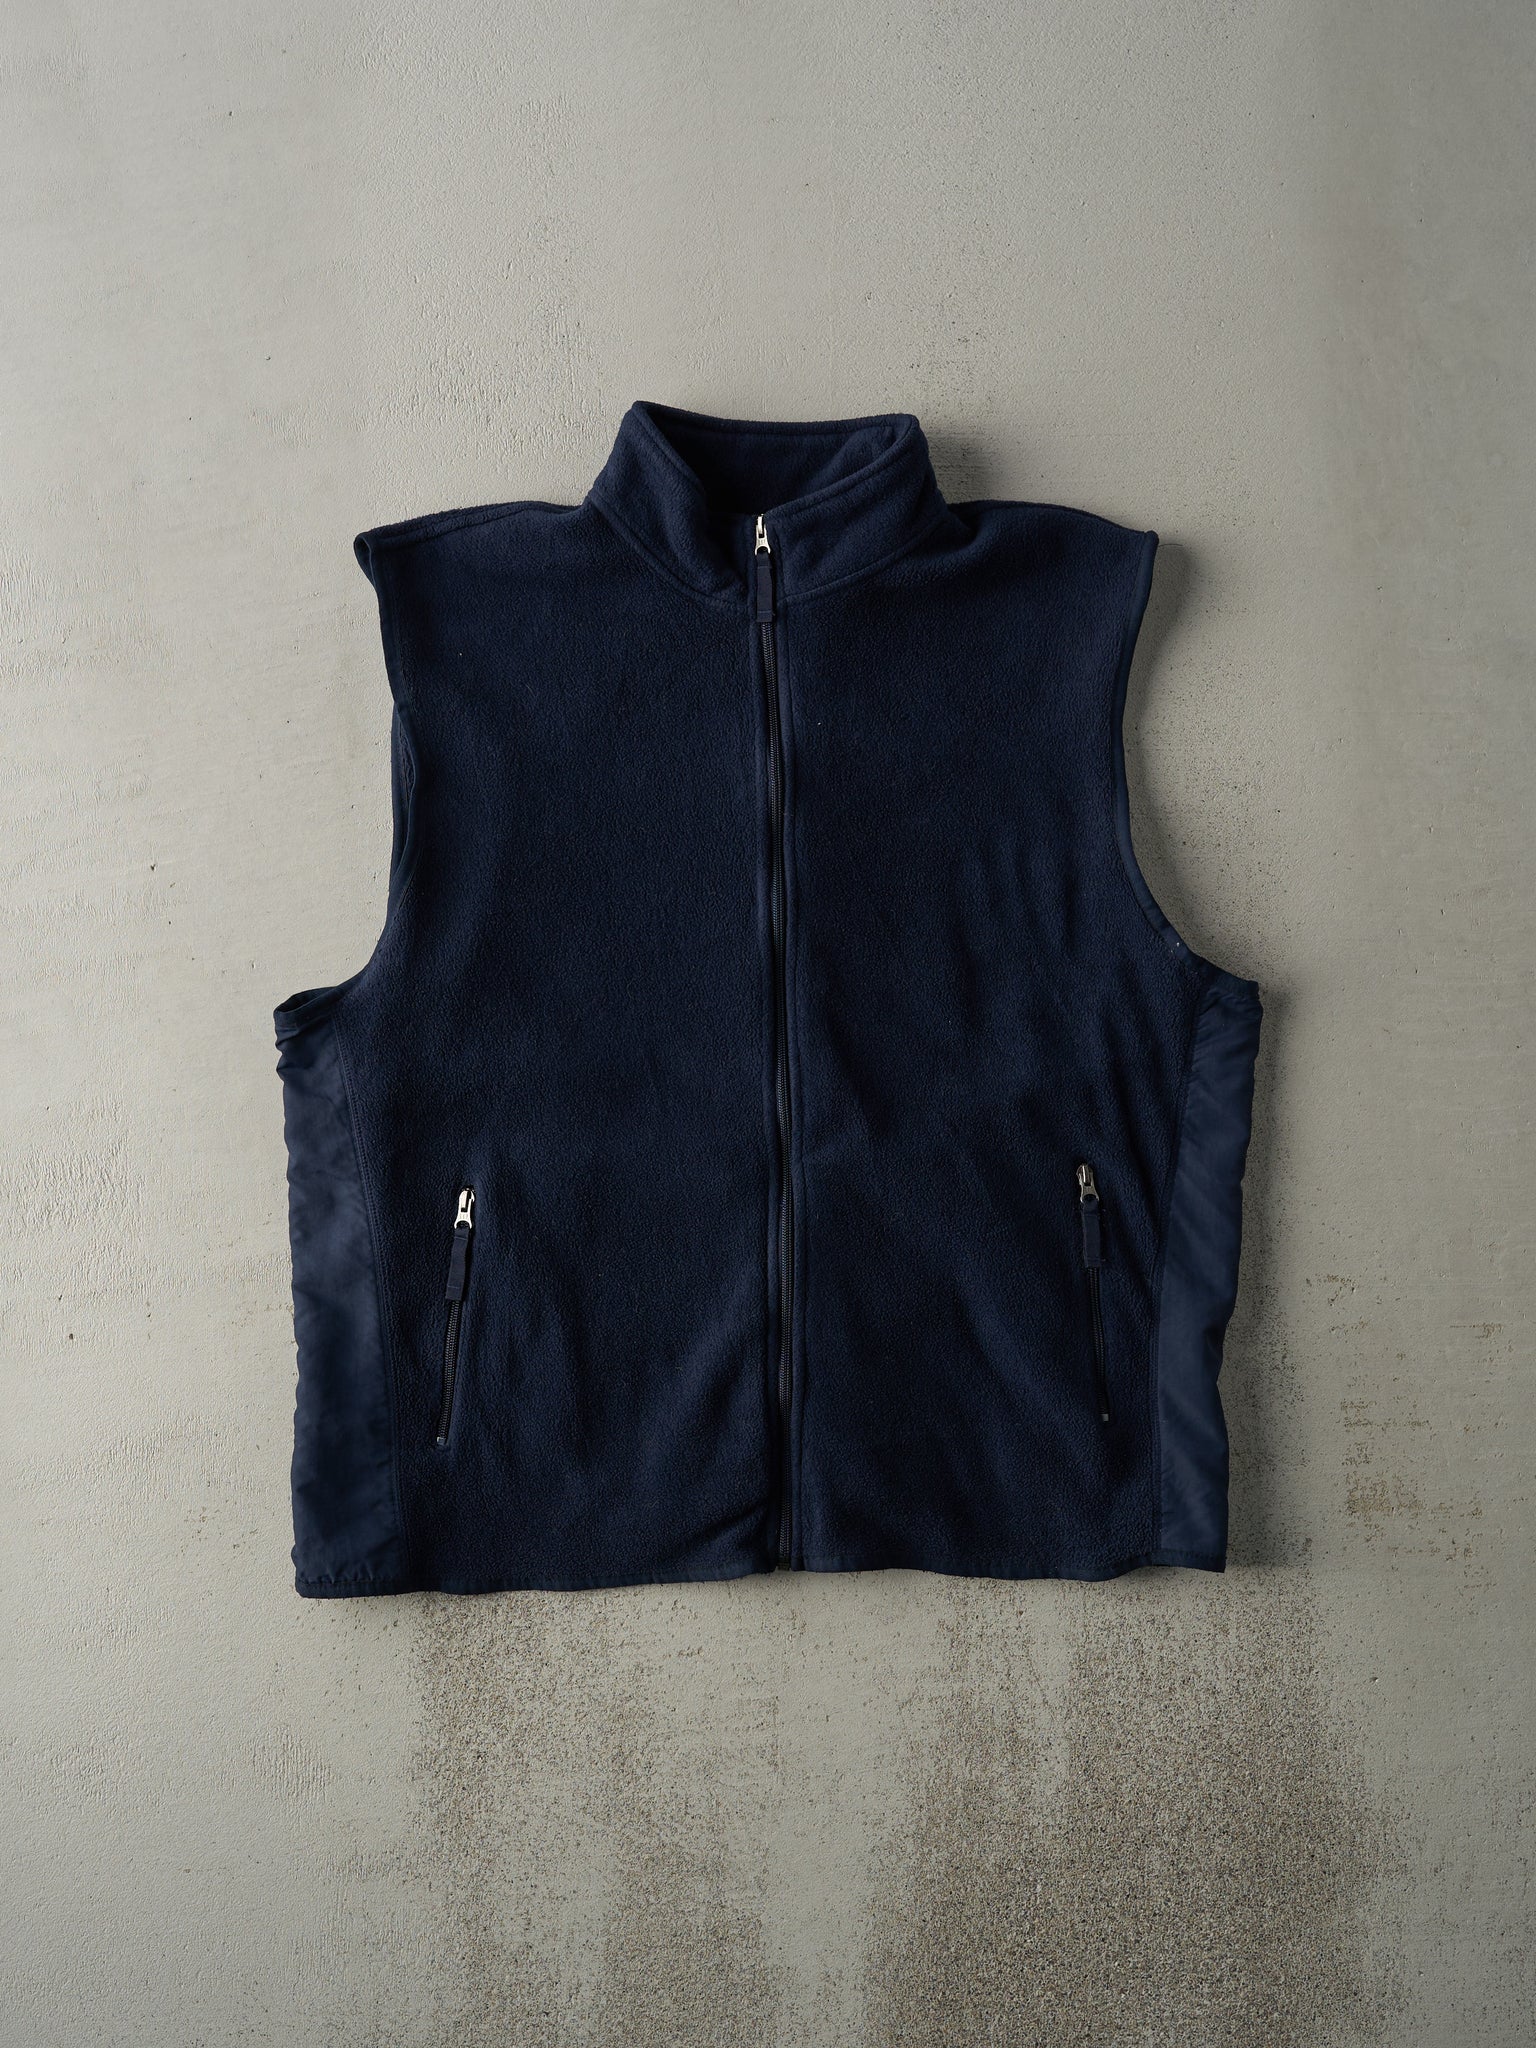 Vintage 90s Navy Blue Gap Fleece Vest (L)